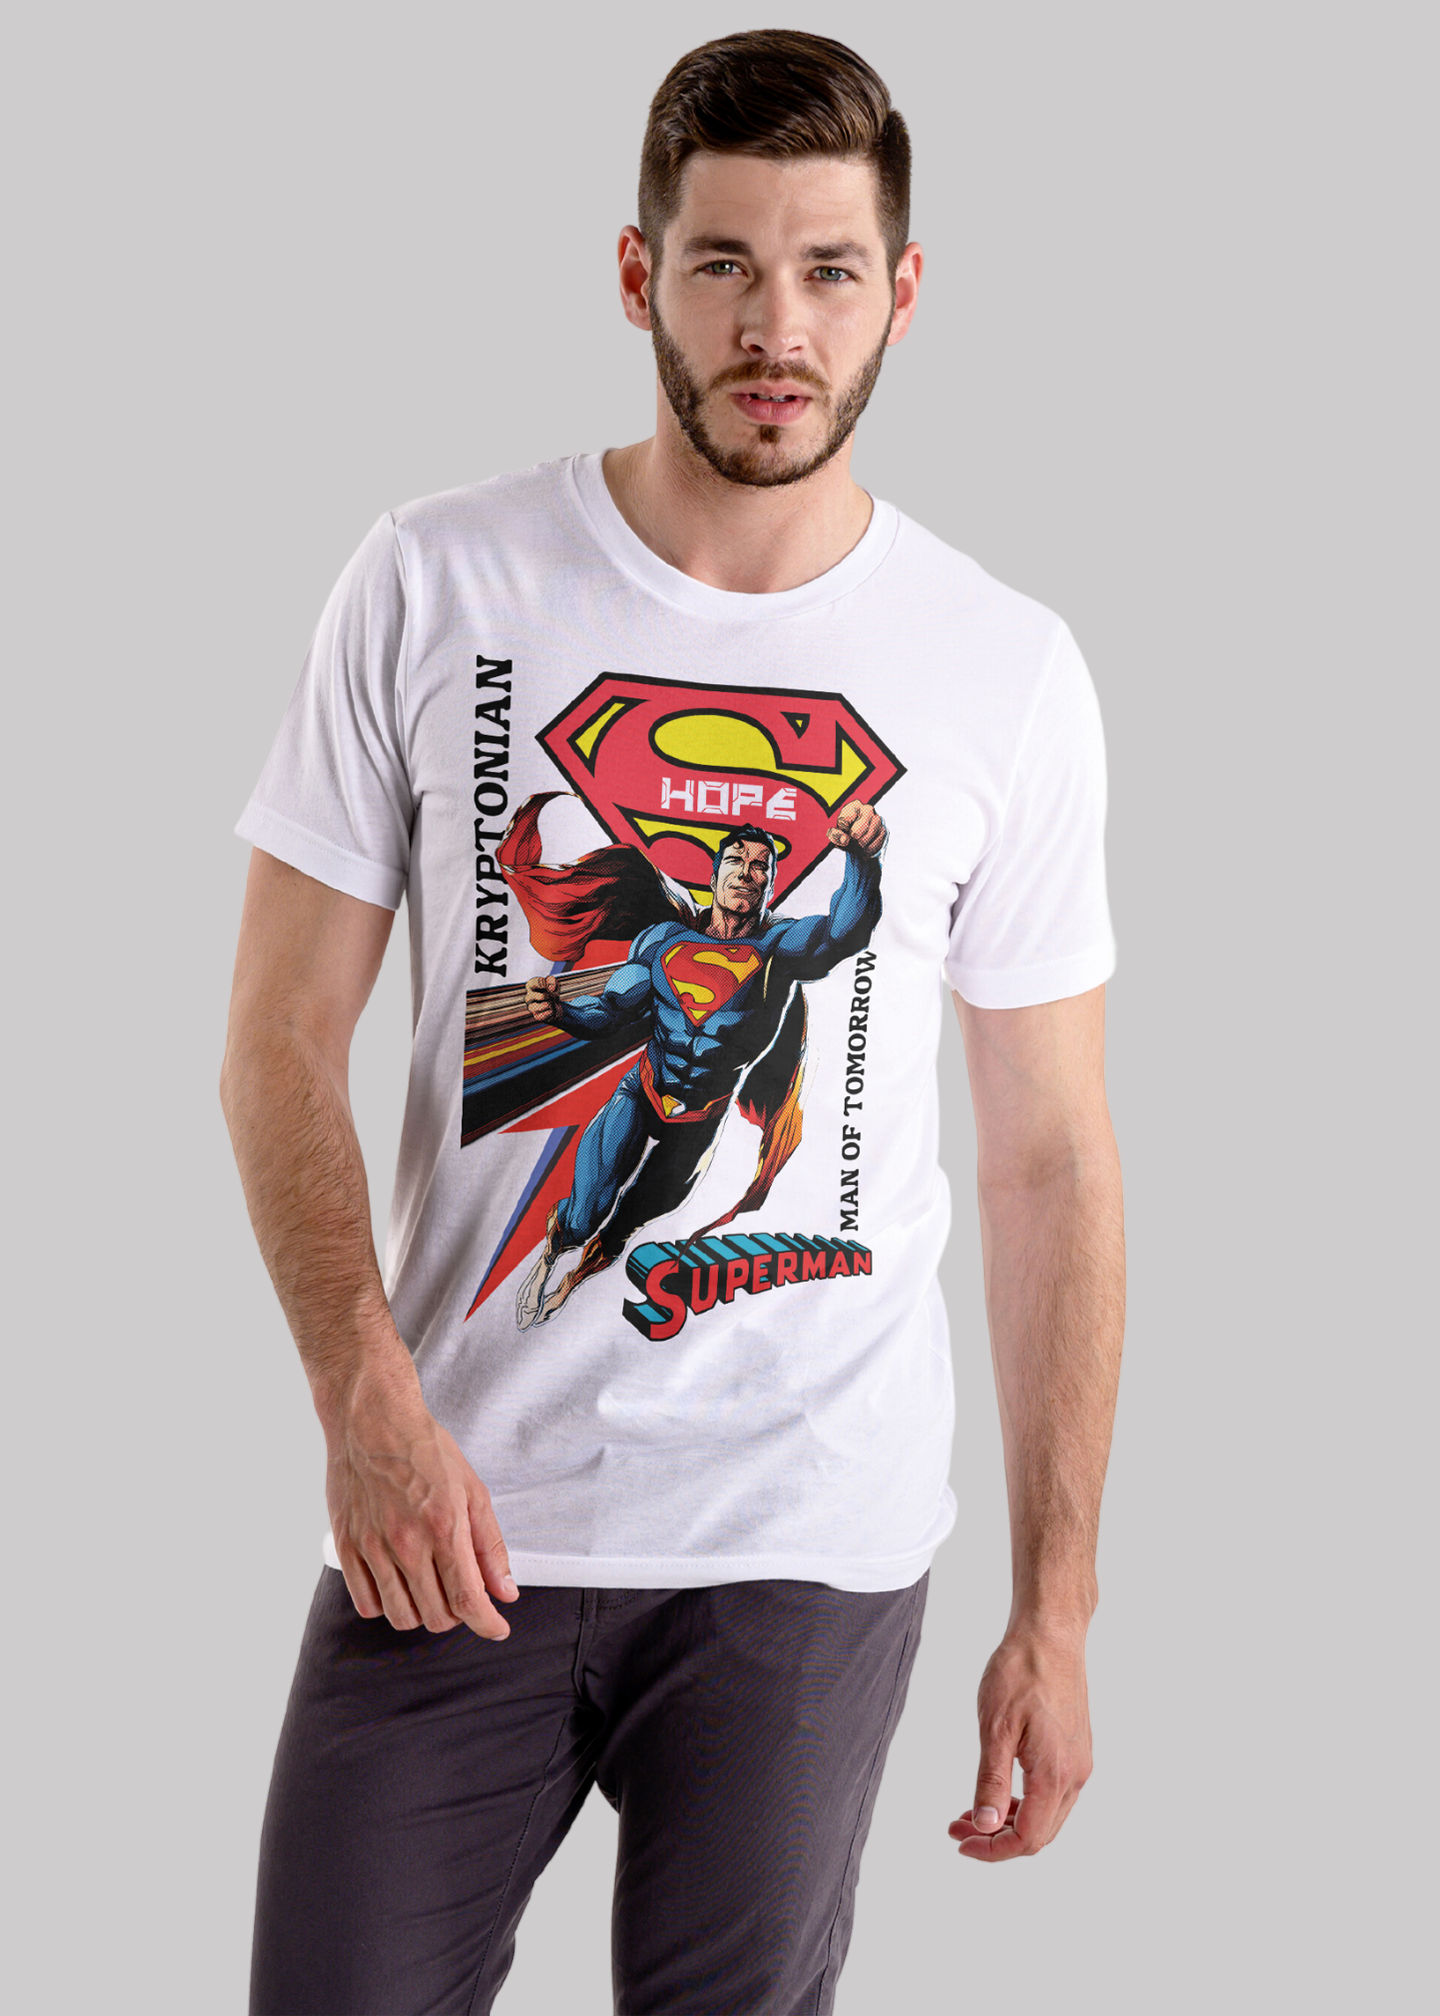 Superman man of tomorrow Printed Half Sleeve Premium Cotton T-shirt For Men